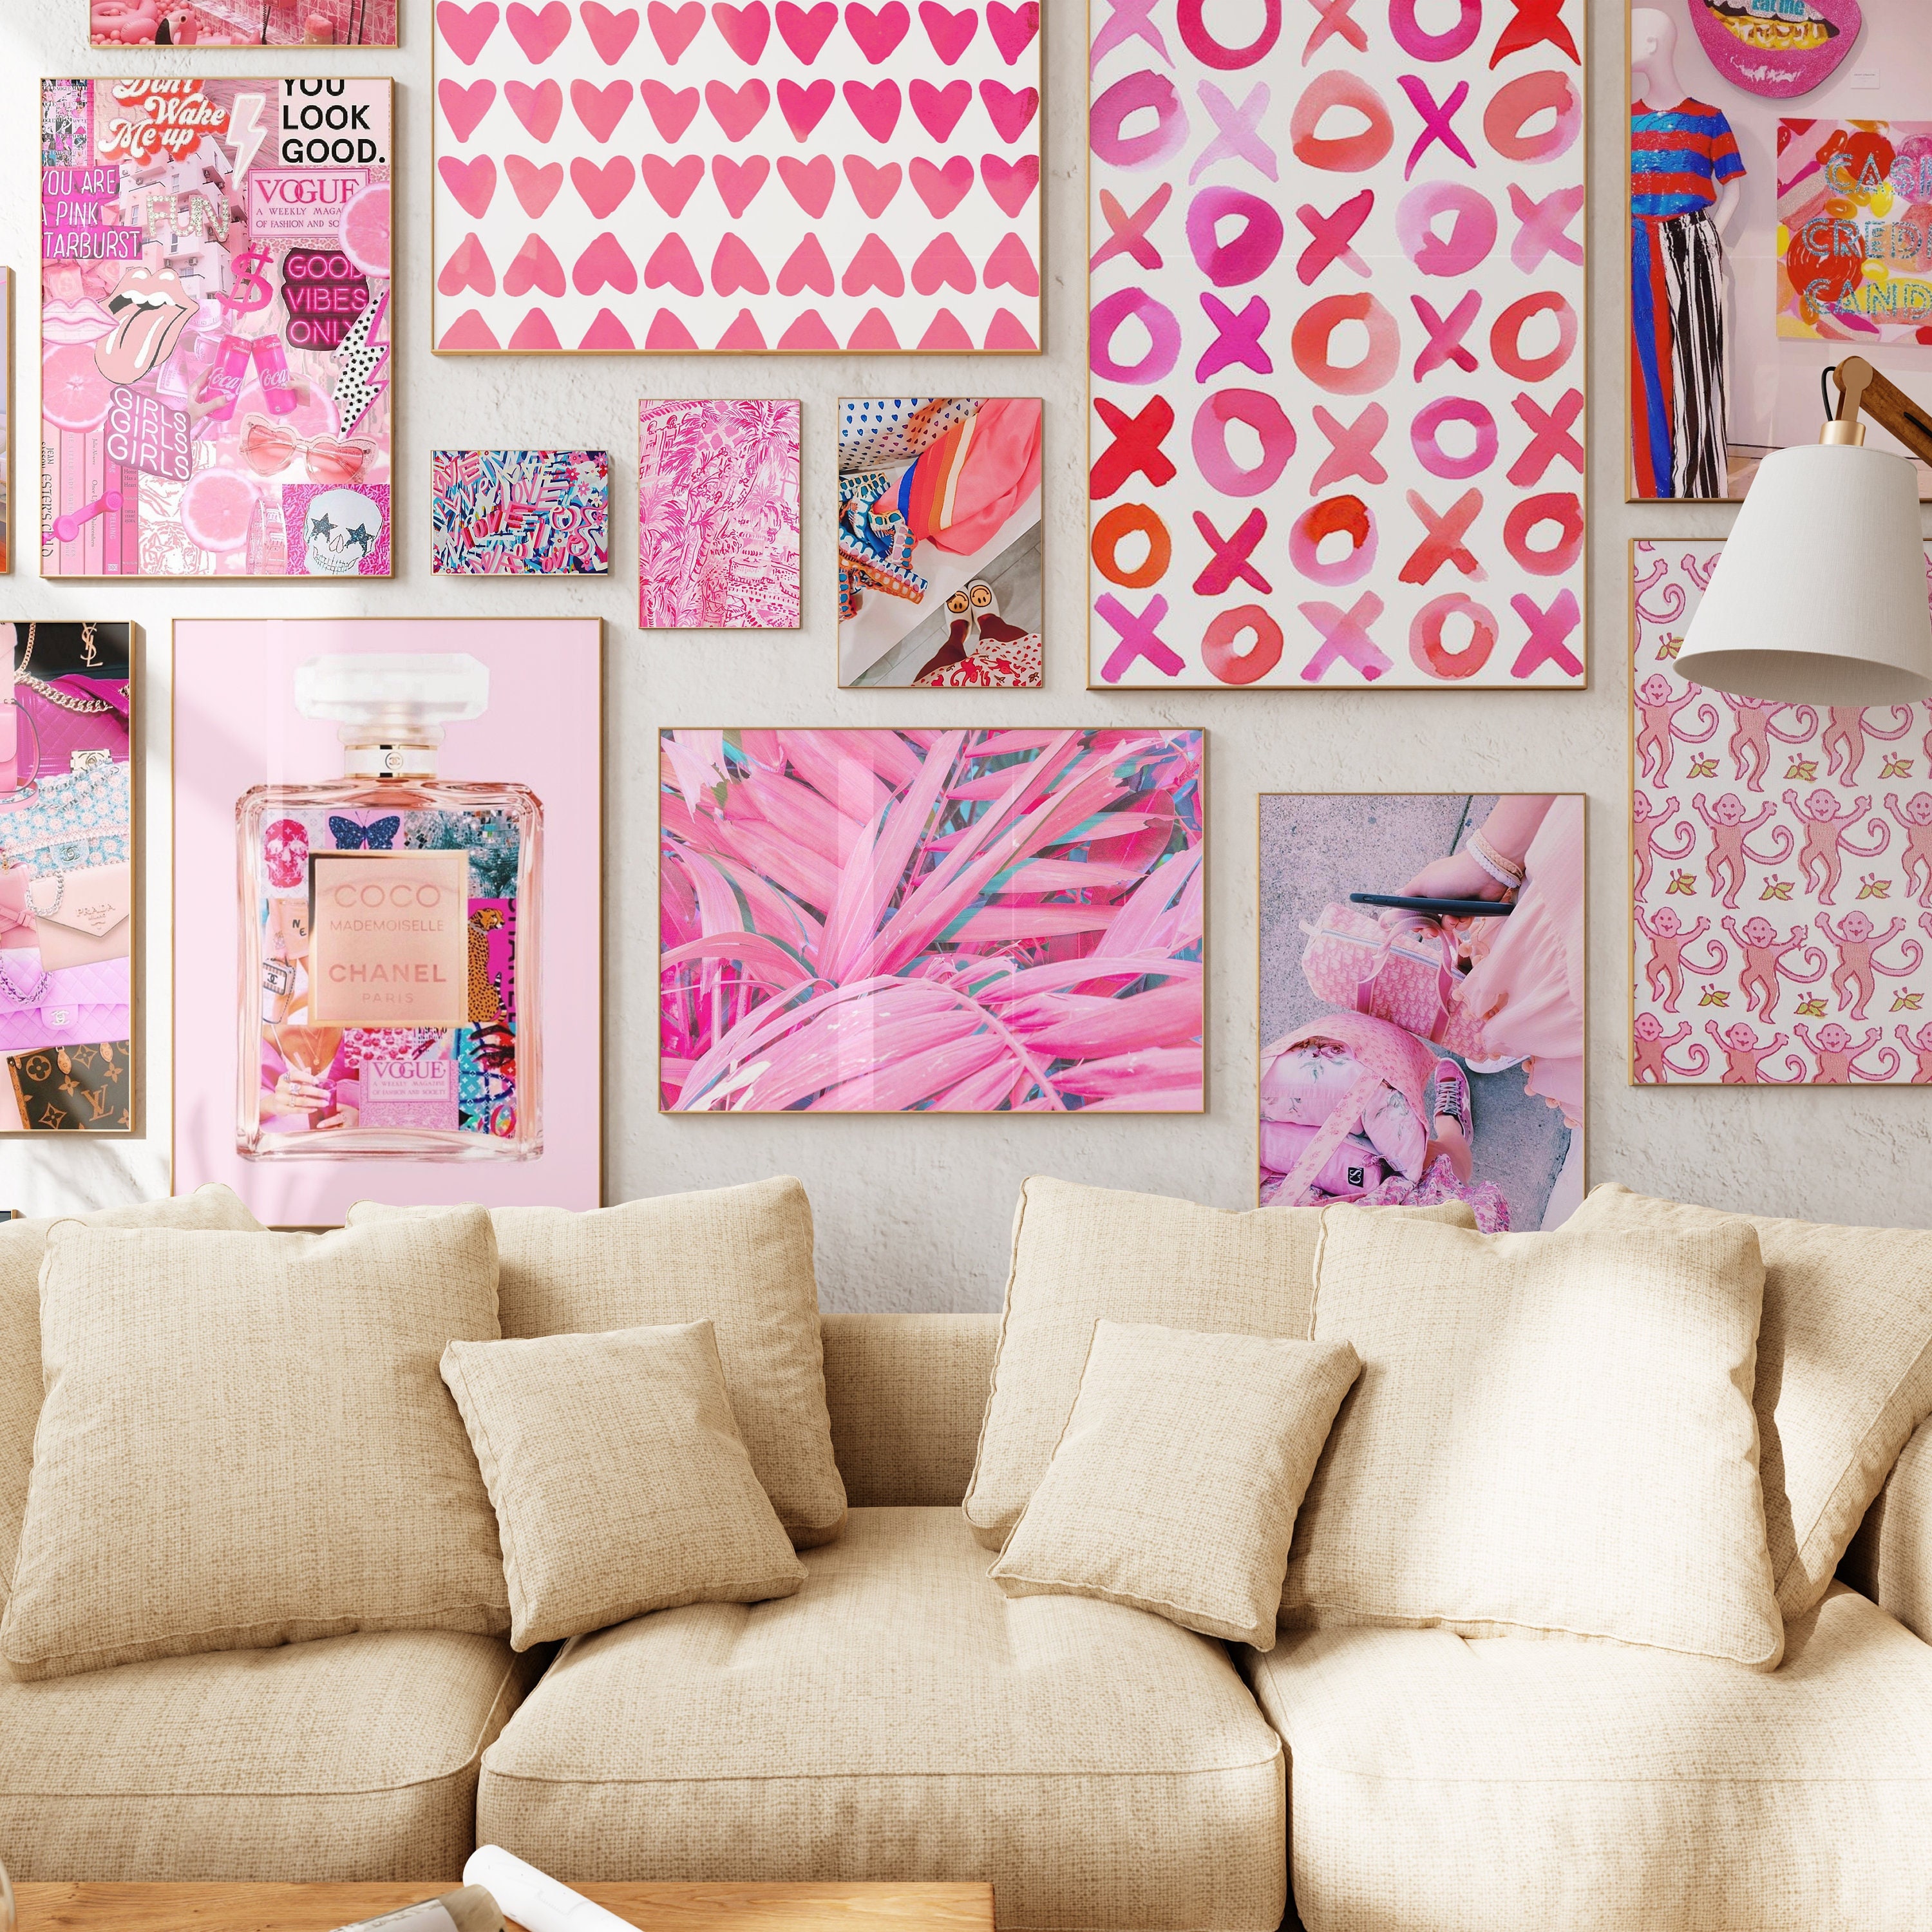 Cloncep Design Preppy Room Decor Collage Kit, 50 PCS, 4x6 Inch, Preppy  Decor for